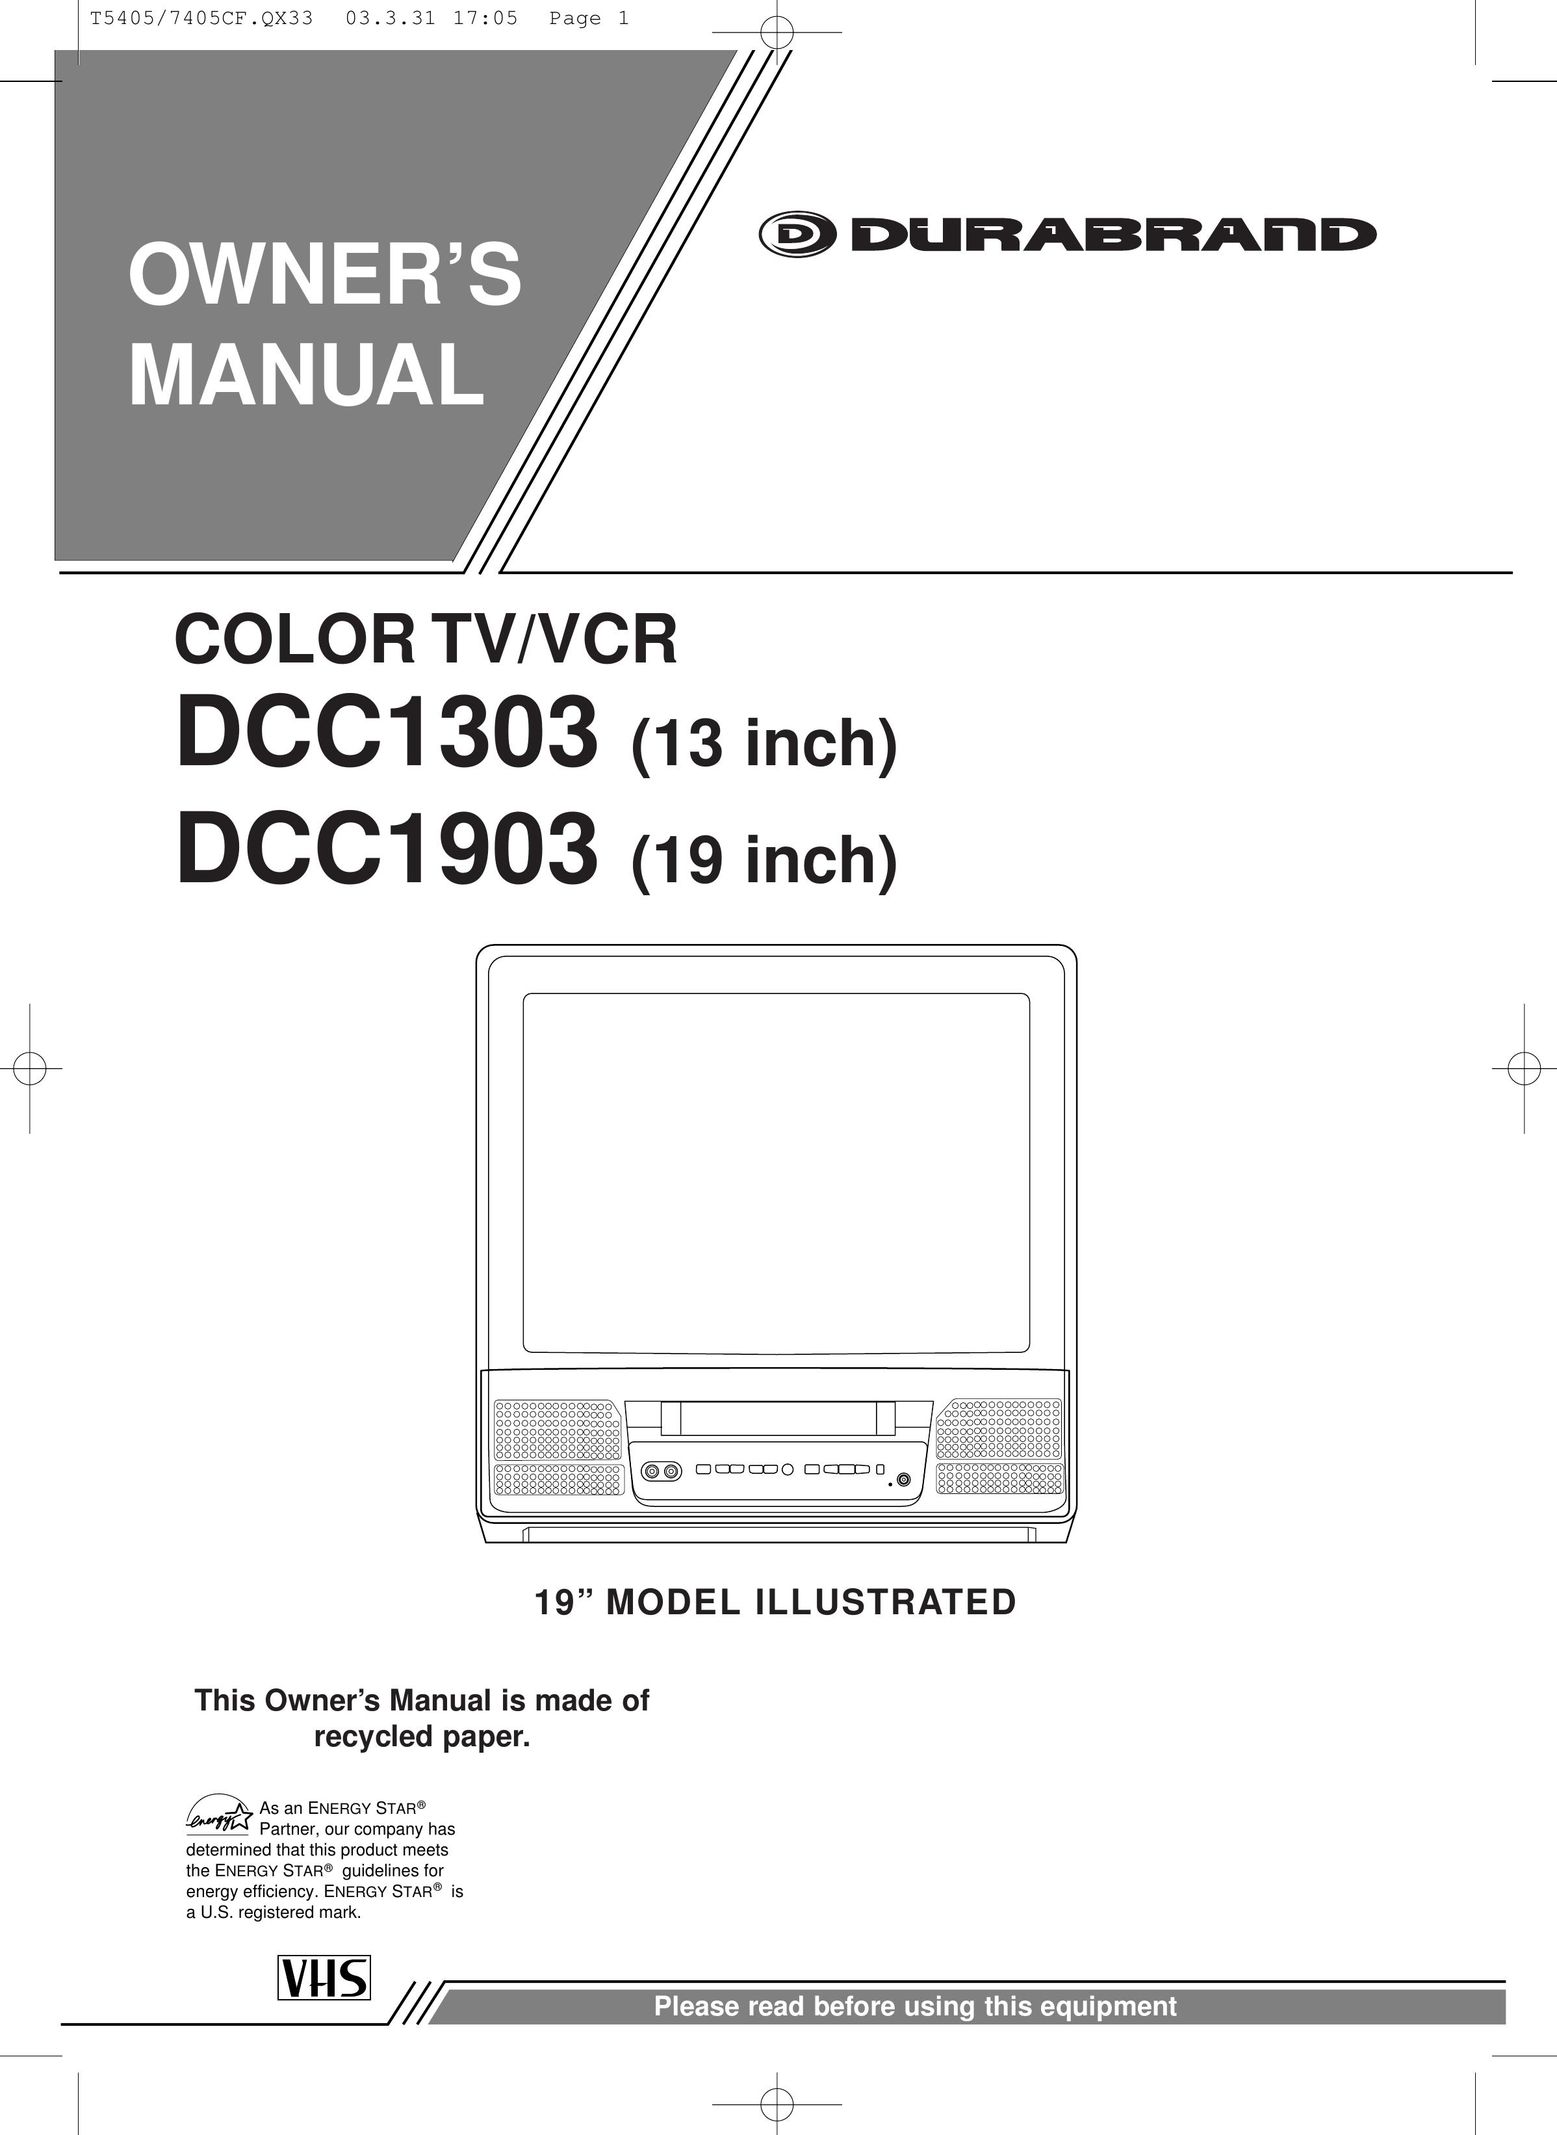 Durabrand DCC1903 CRT Television User Manual